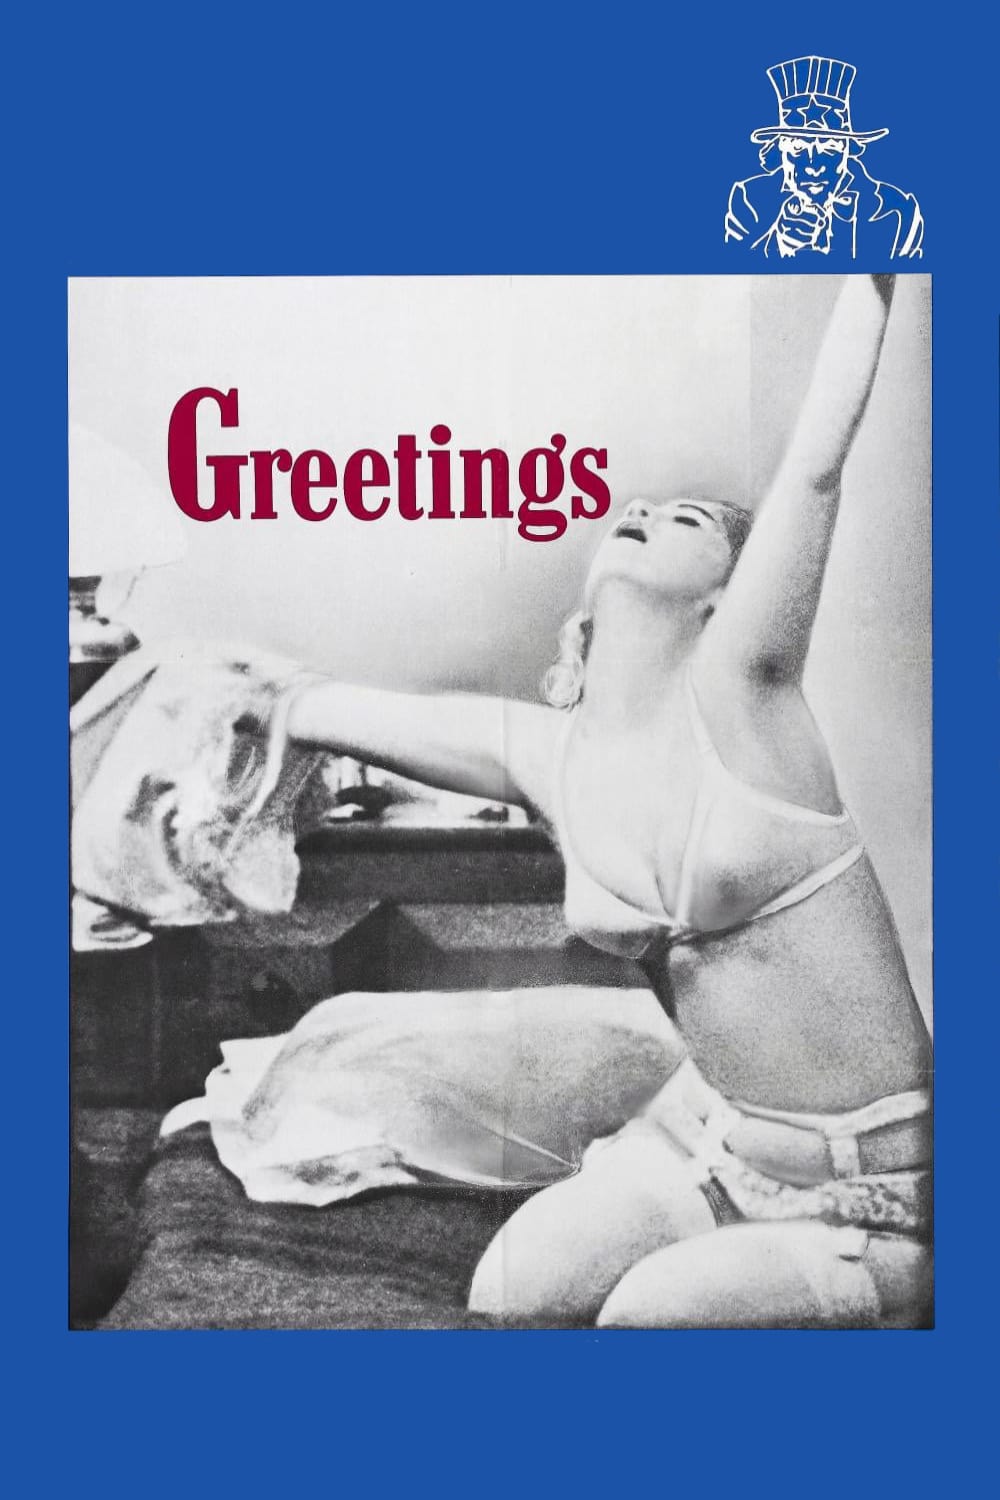 Plakat von "Greetings - Grüße"